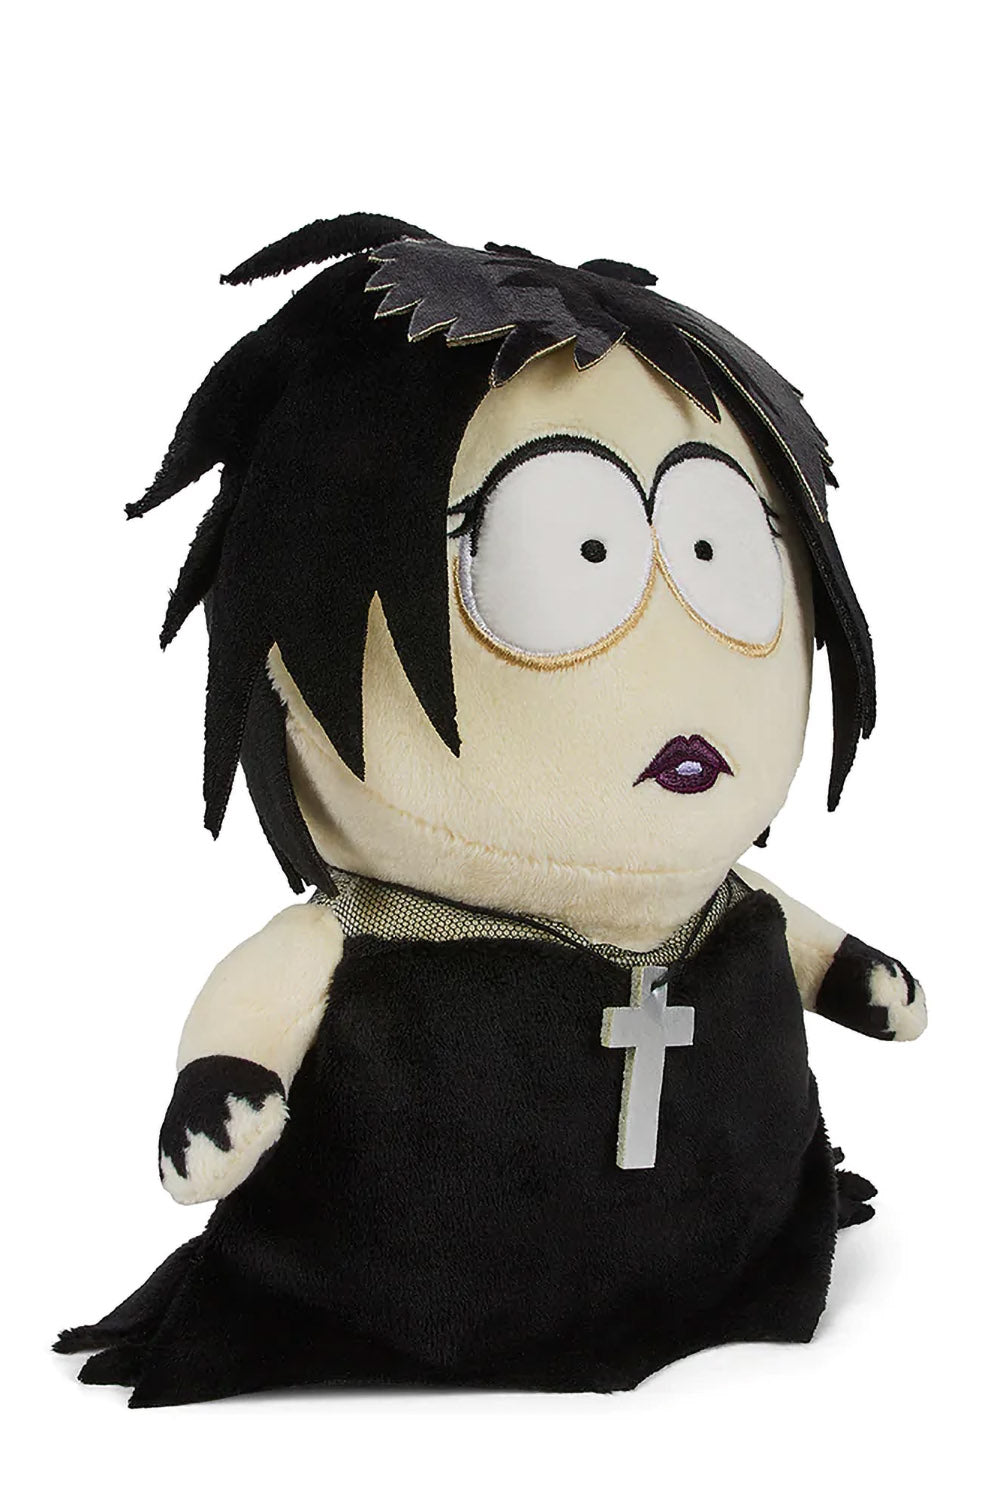 South Park Goth Kid Plush Toy [HENRIETTA]